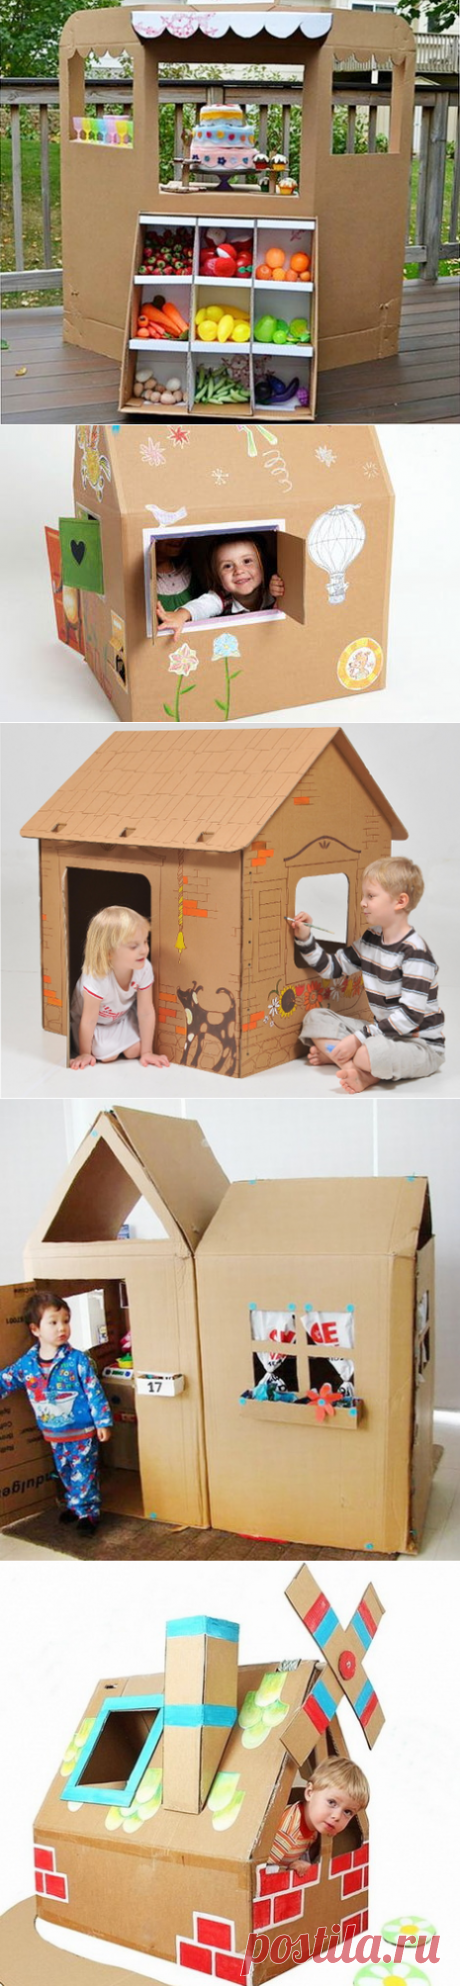 Фото и идеи детских домиков своими руками из картона | Дуэт душ